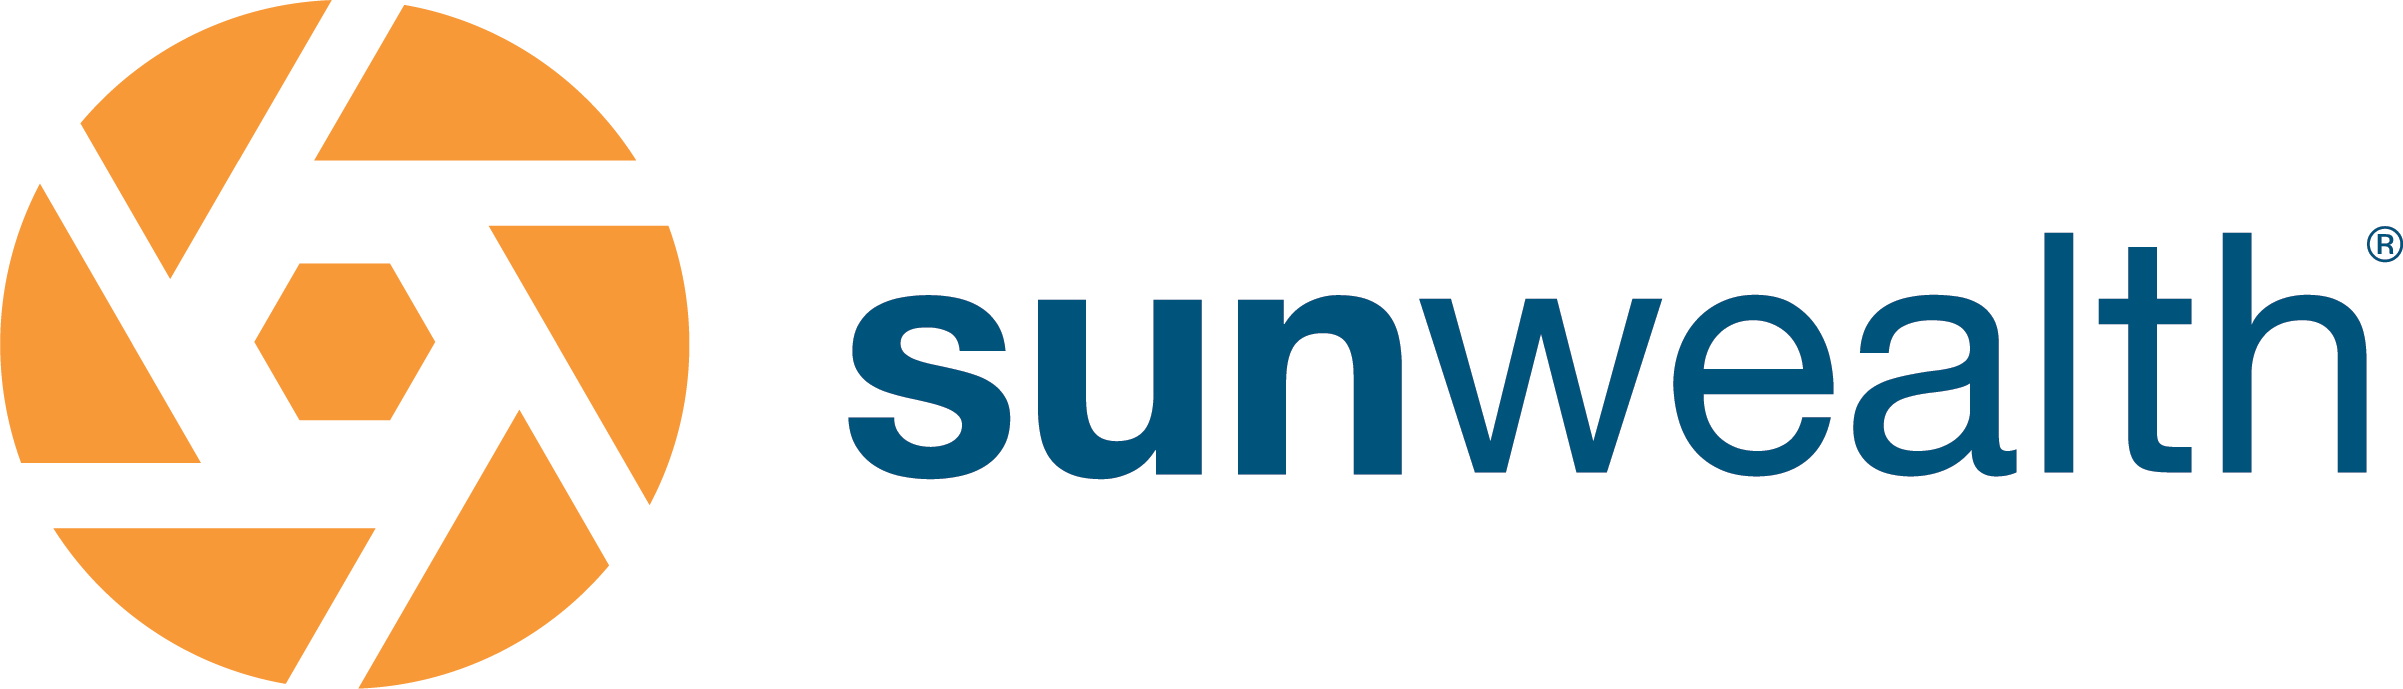 Sunwealth logo